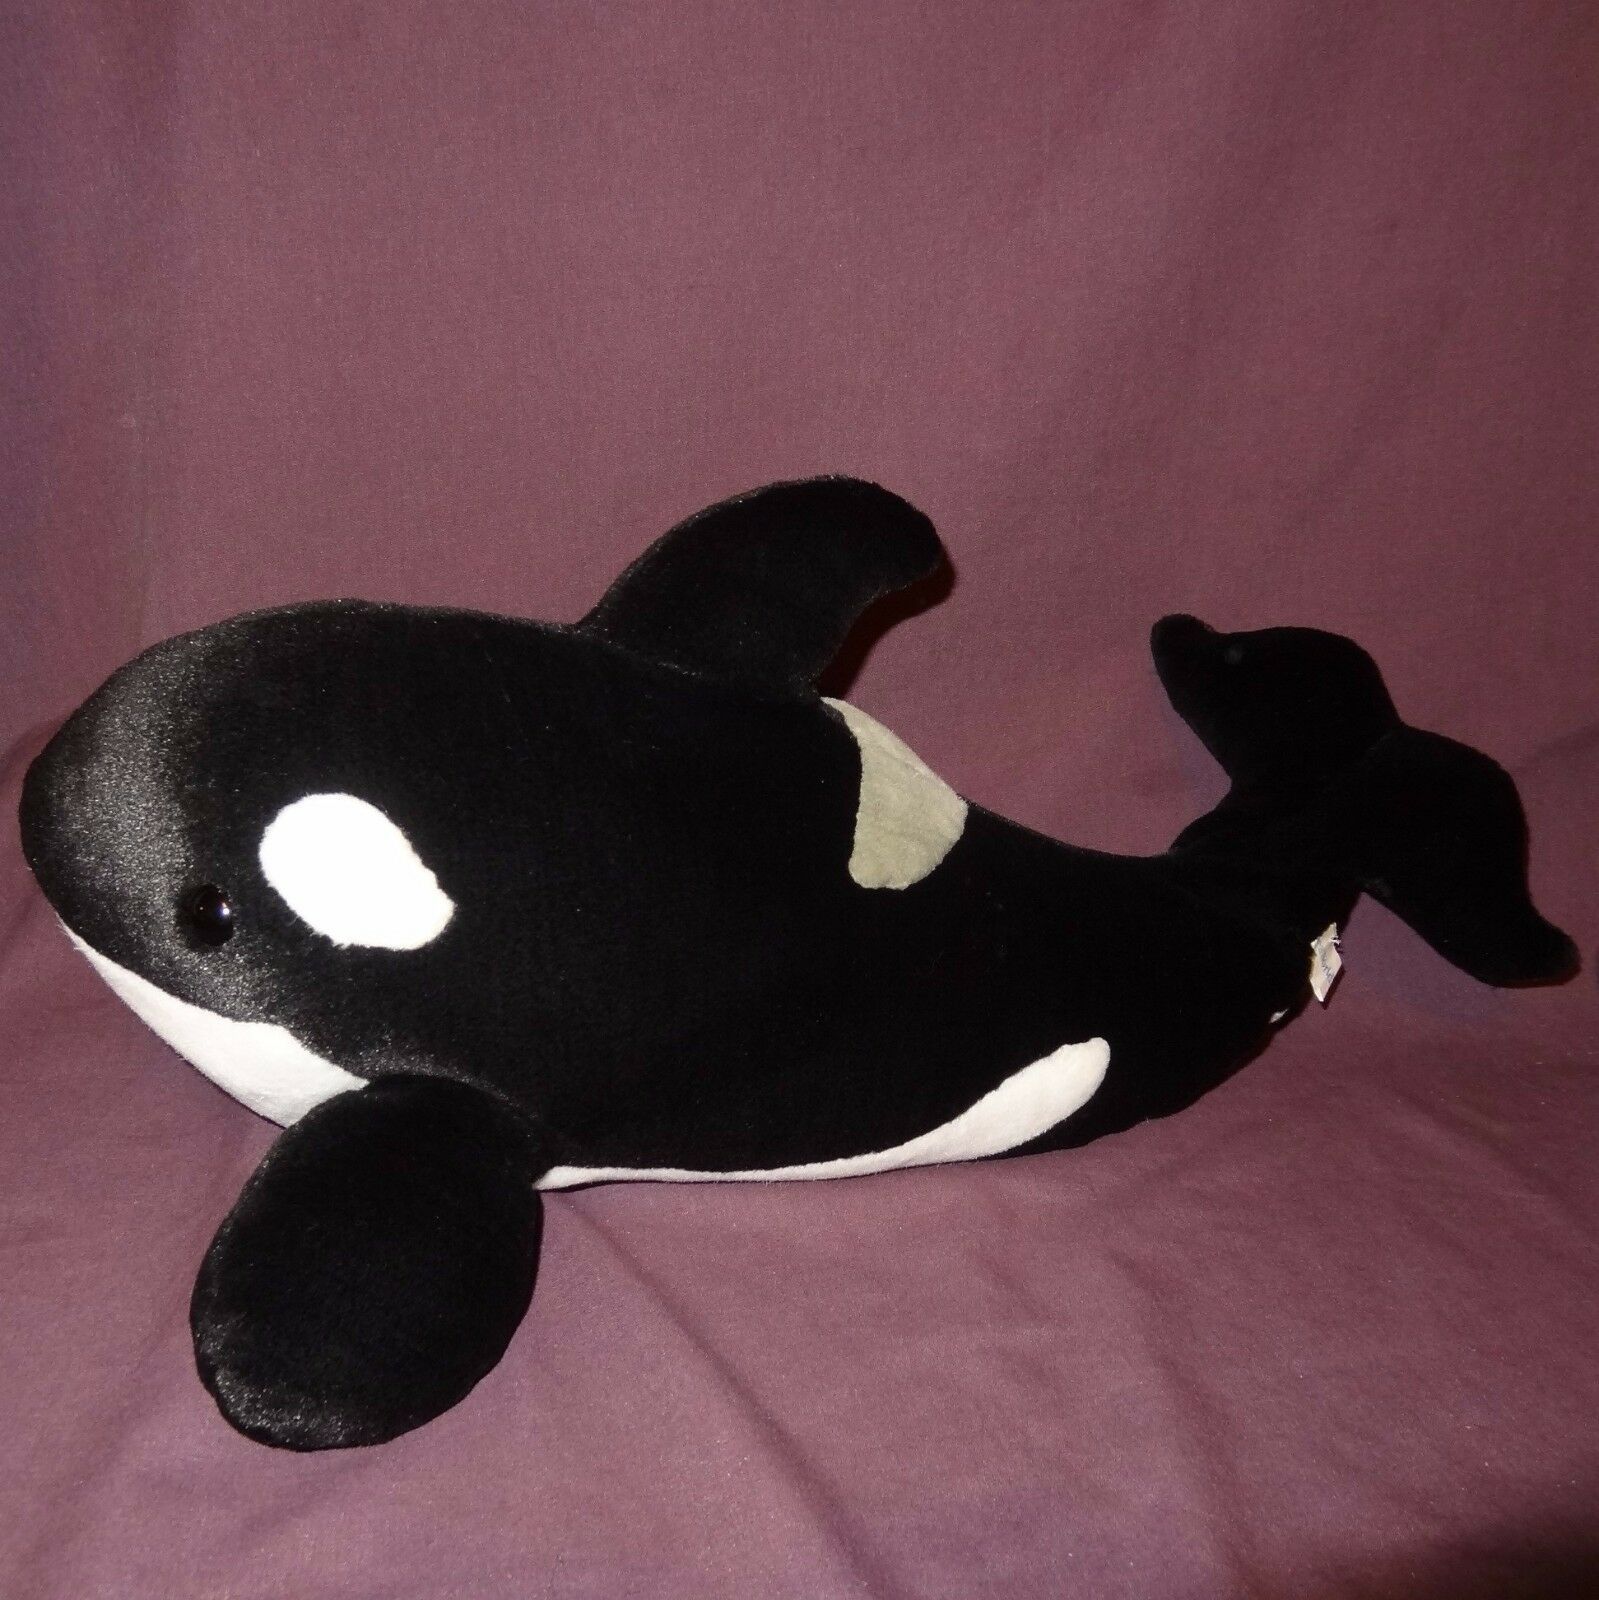 seaworld orca plush